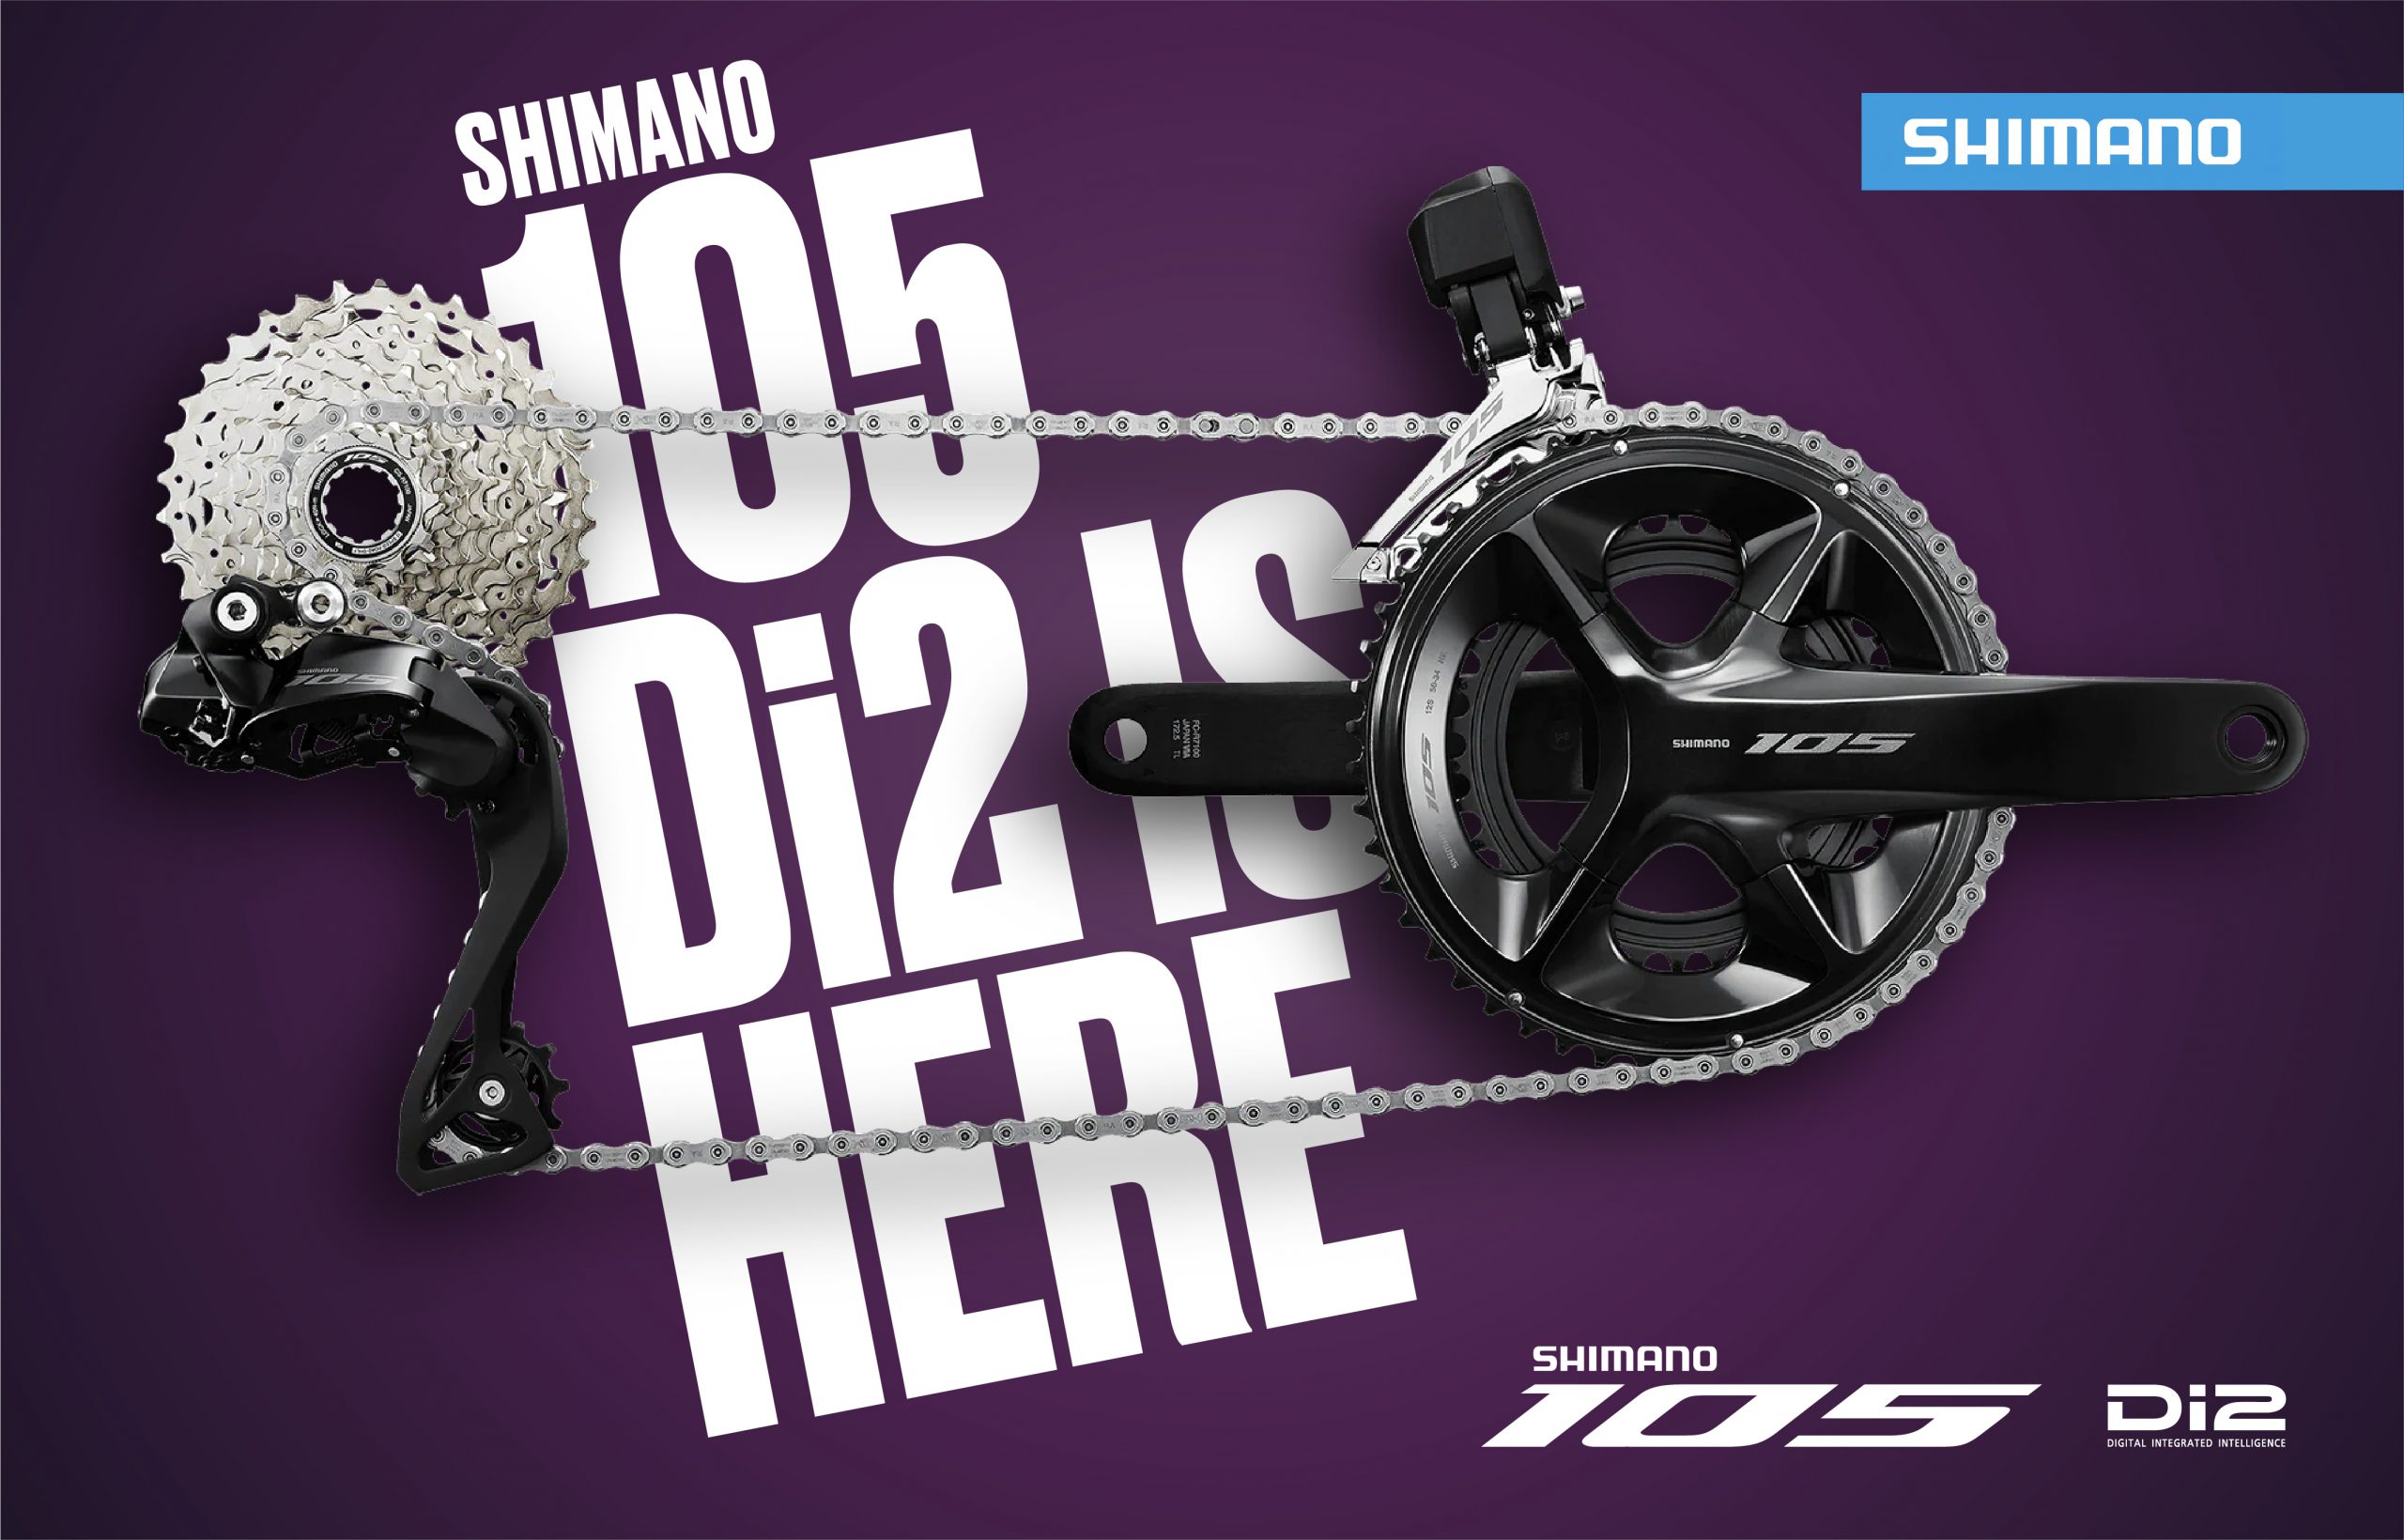 Shimano 105 Di2 R7100